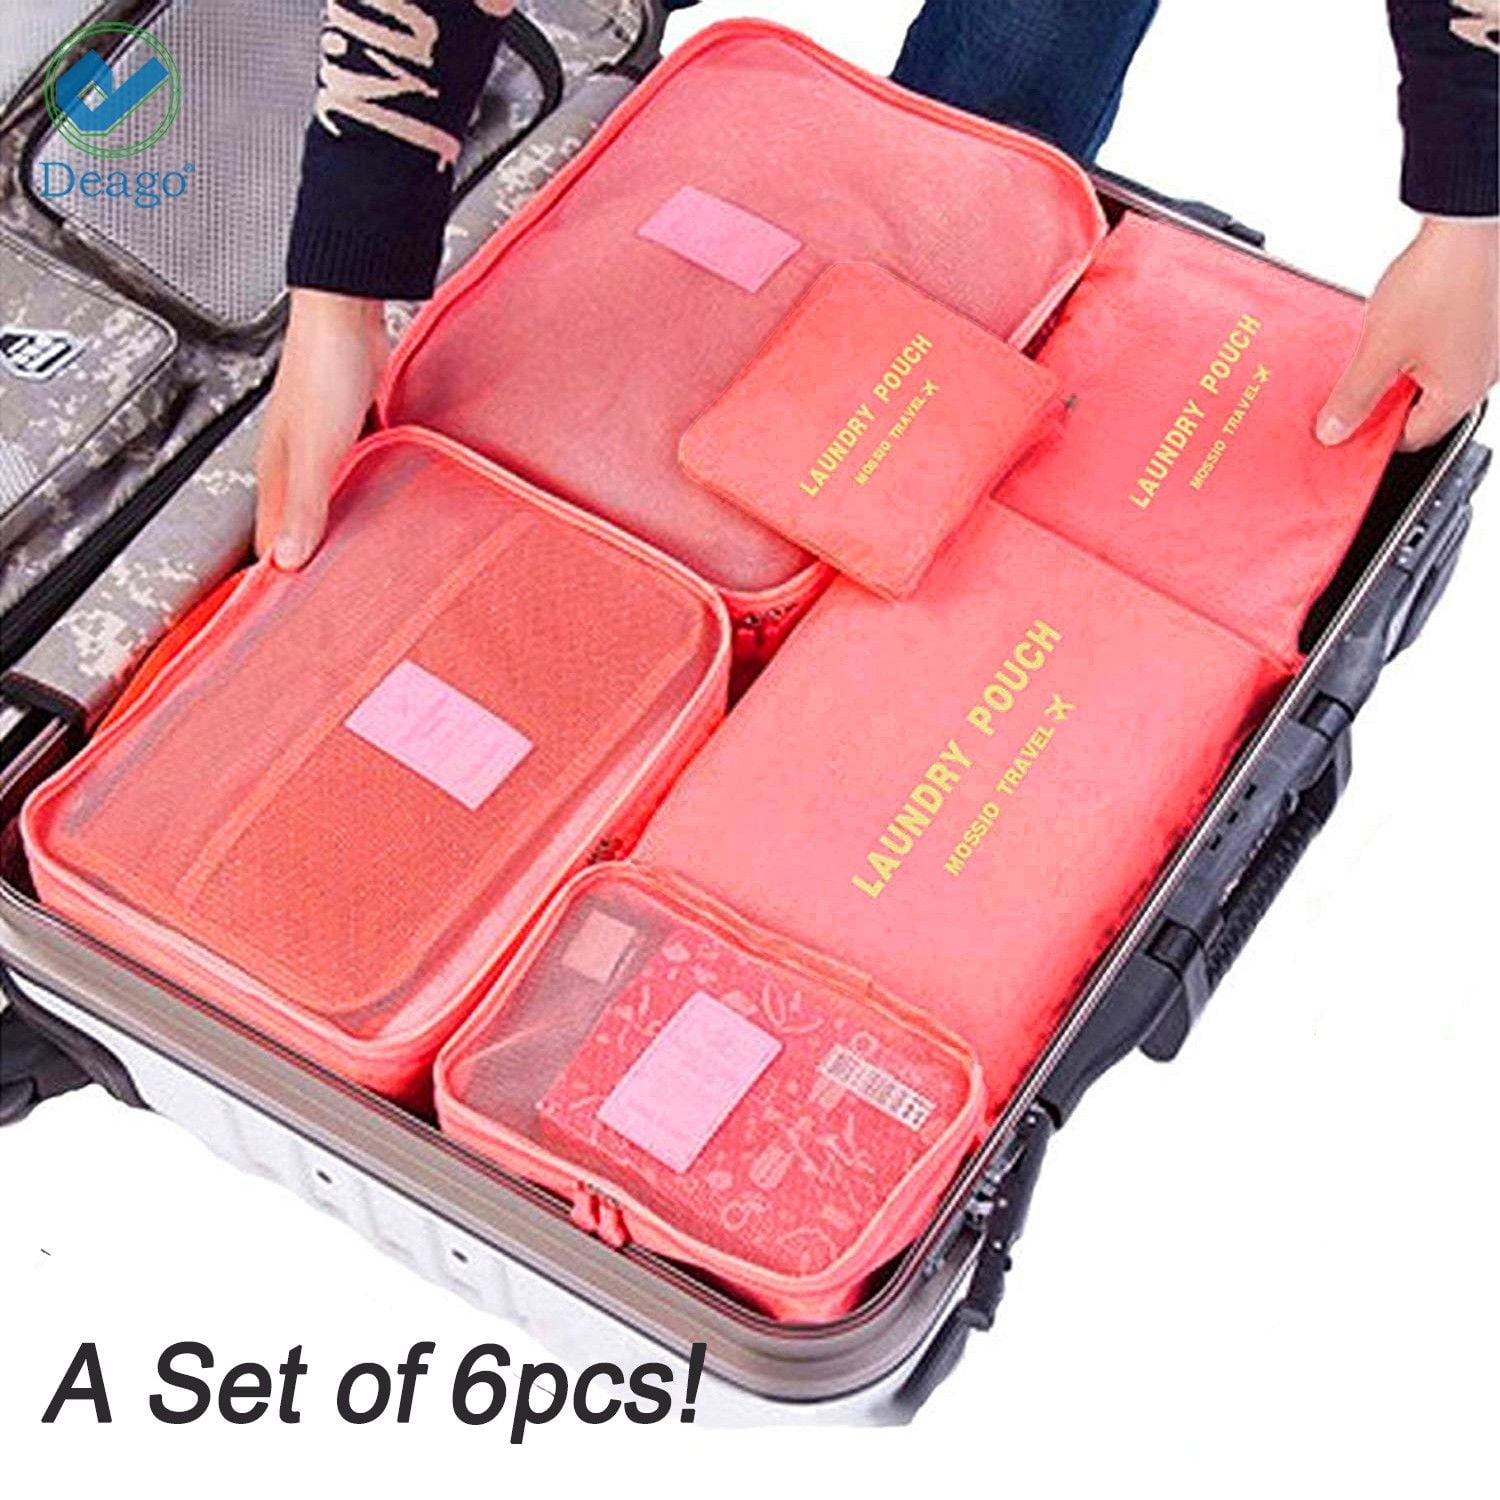 20" Medium Travel Vacuum Bags Sealer for Clothes Pillows Household 8PCS 28" 